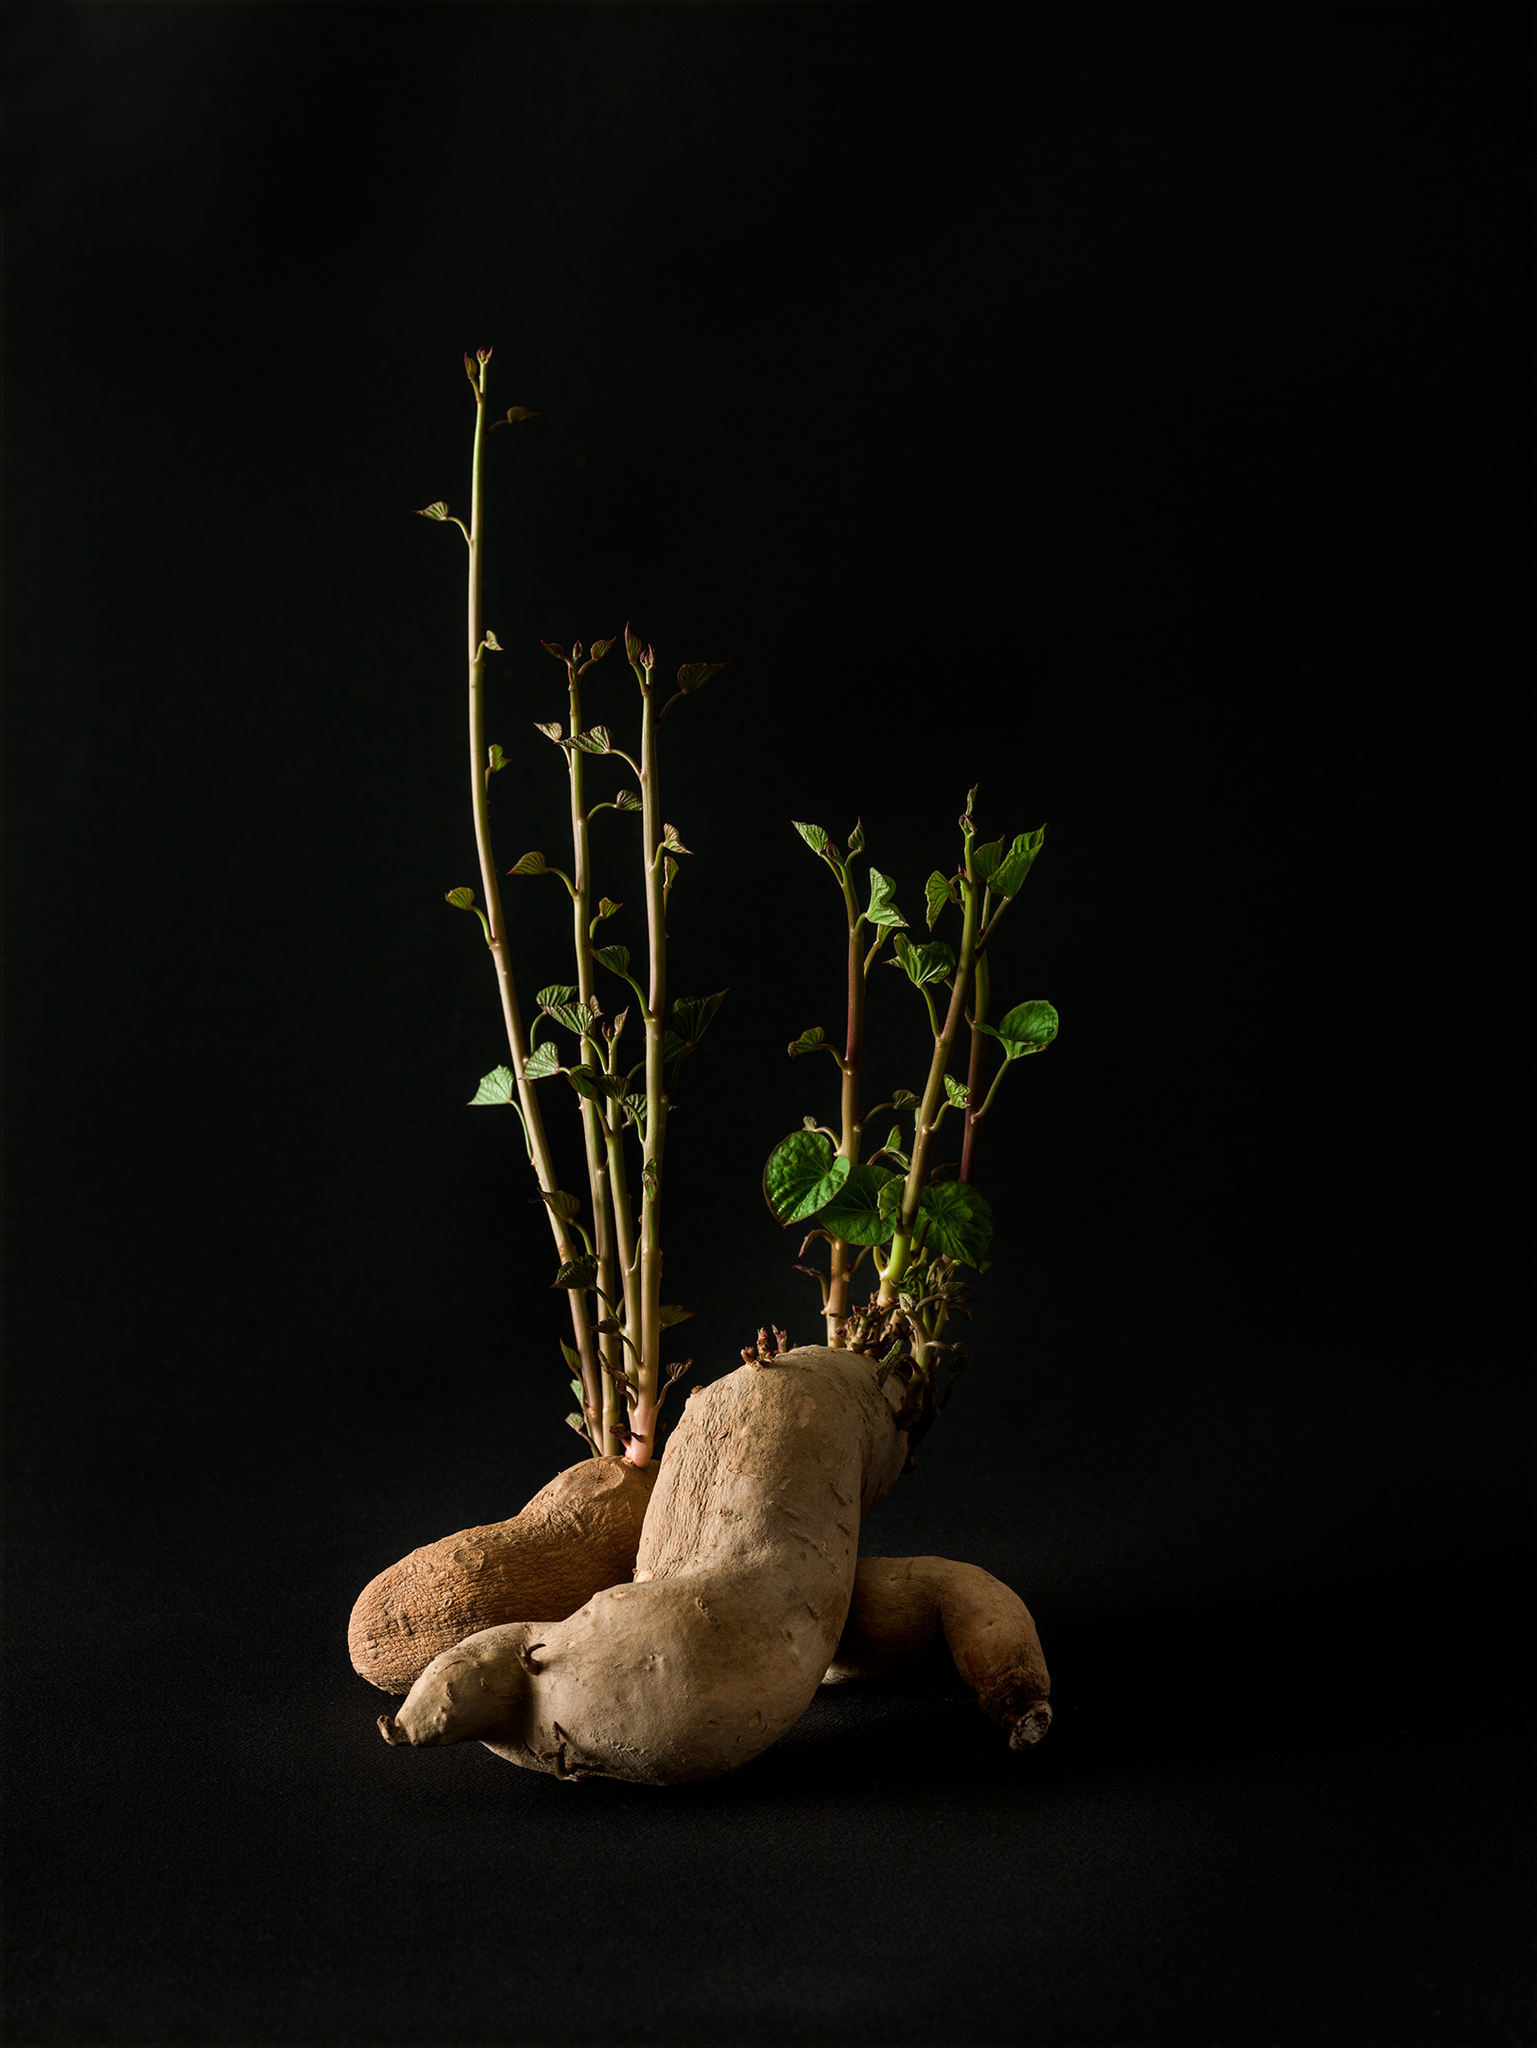 Beth Galton, 'Fingerling Sweet potatoes from Union Square Greenmarket, N.Y, N.Y; propagation period: 16 days in North-facing window'